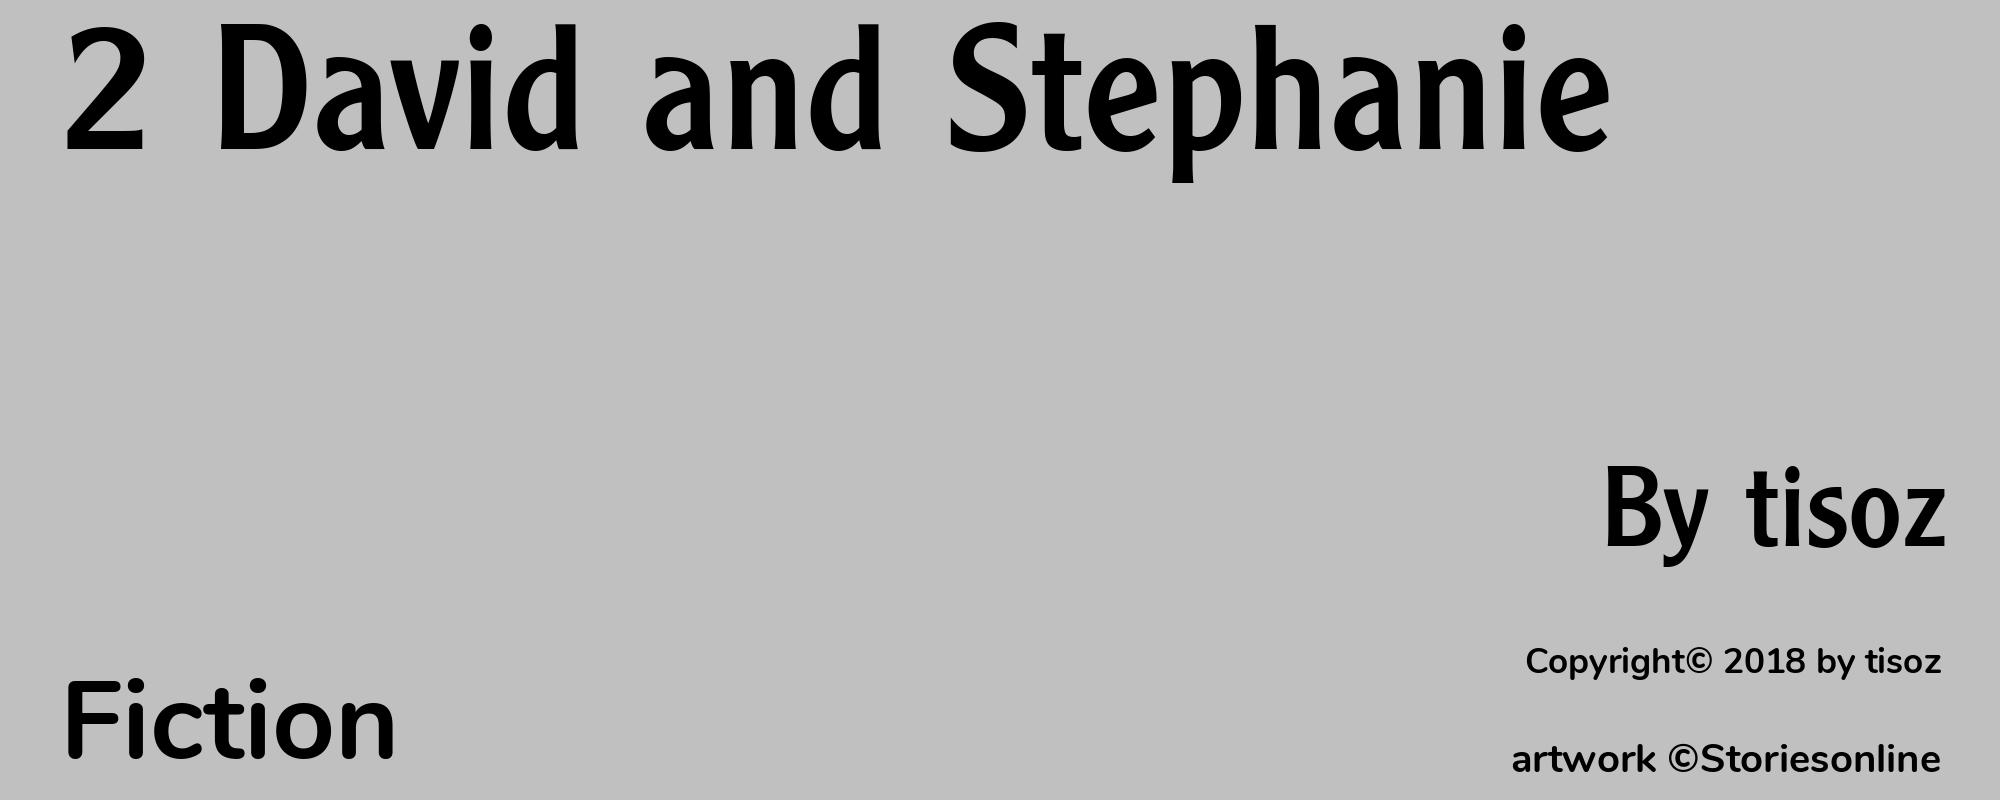 2 David and Stephanie - Cover